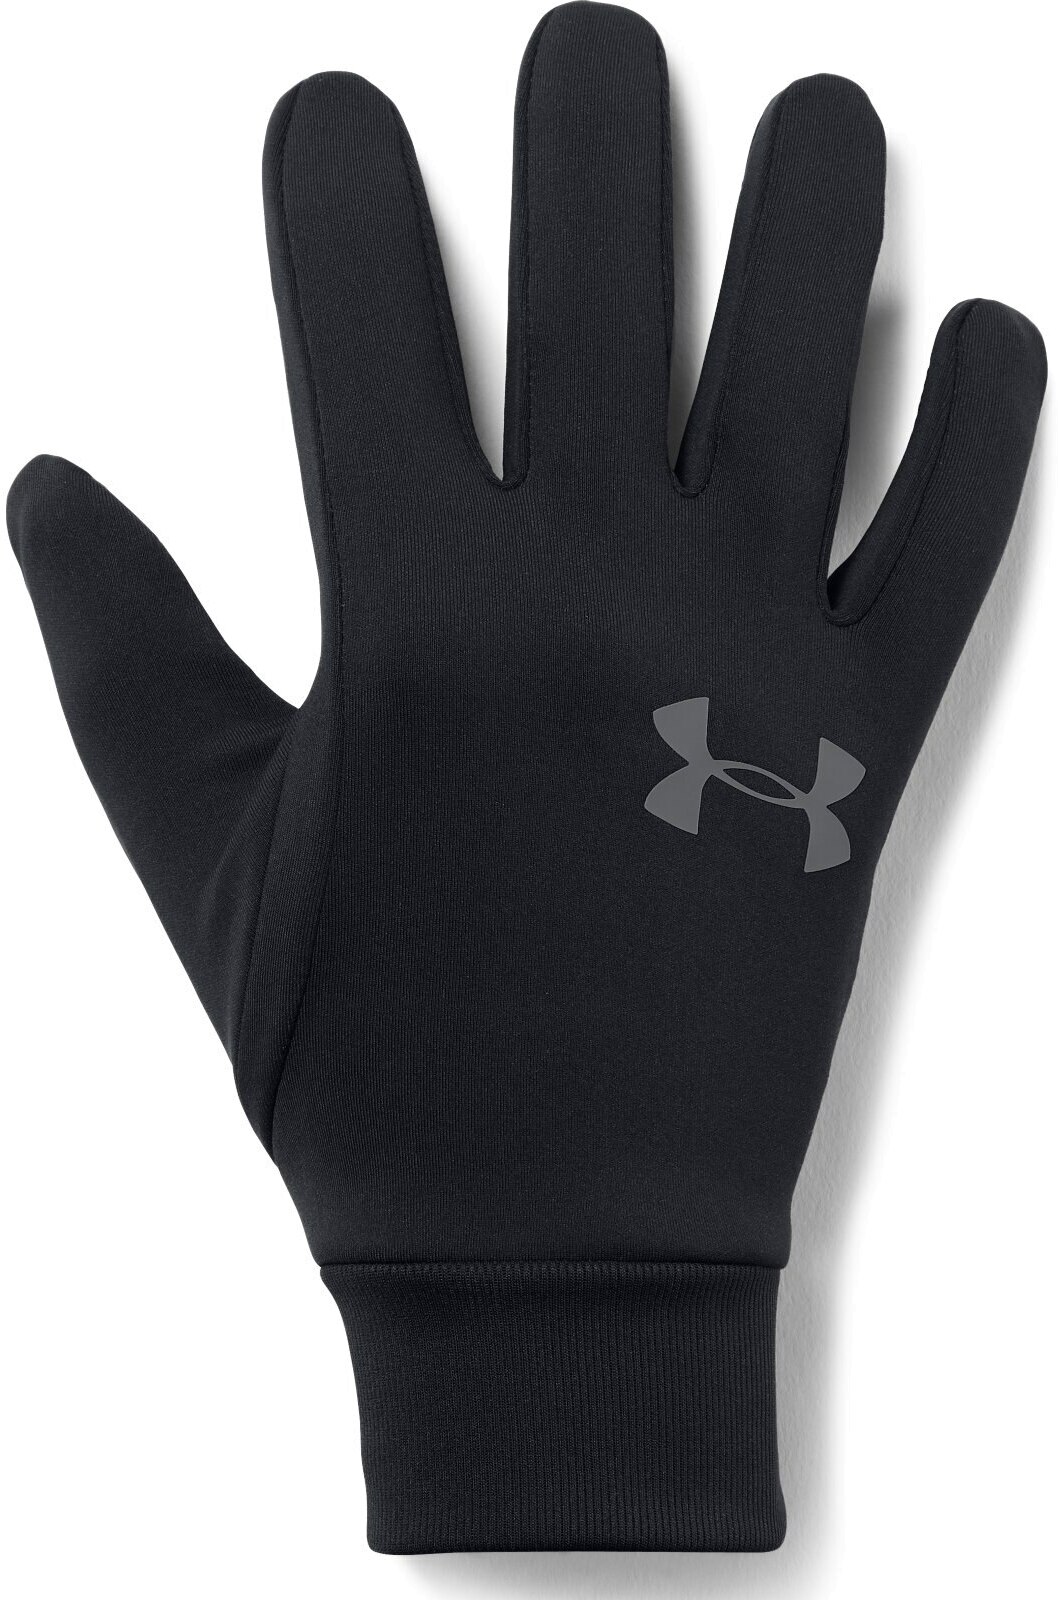 Мужские перчатки Under Armour Armour ® Liner 2.0 1318546-001